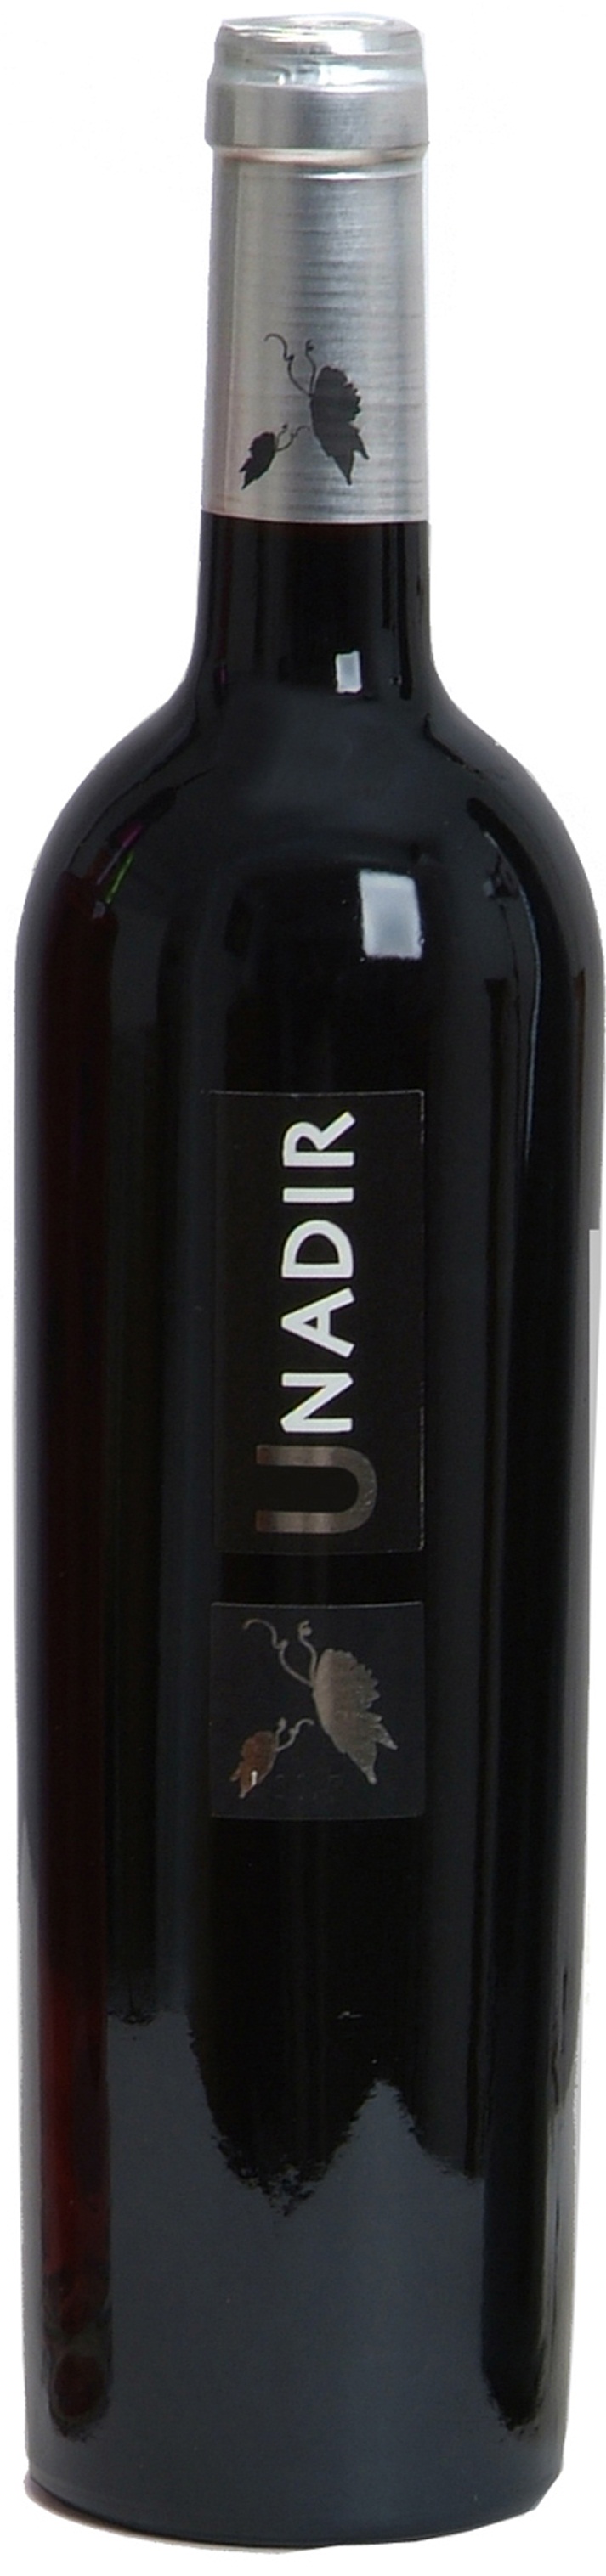 Image of Wine bottle Unadir Tinto Roble